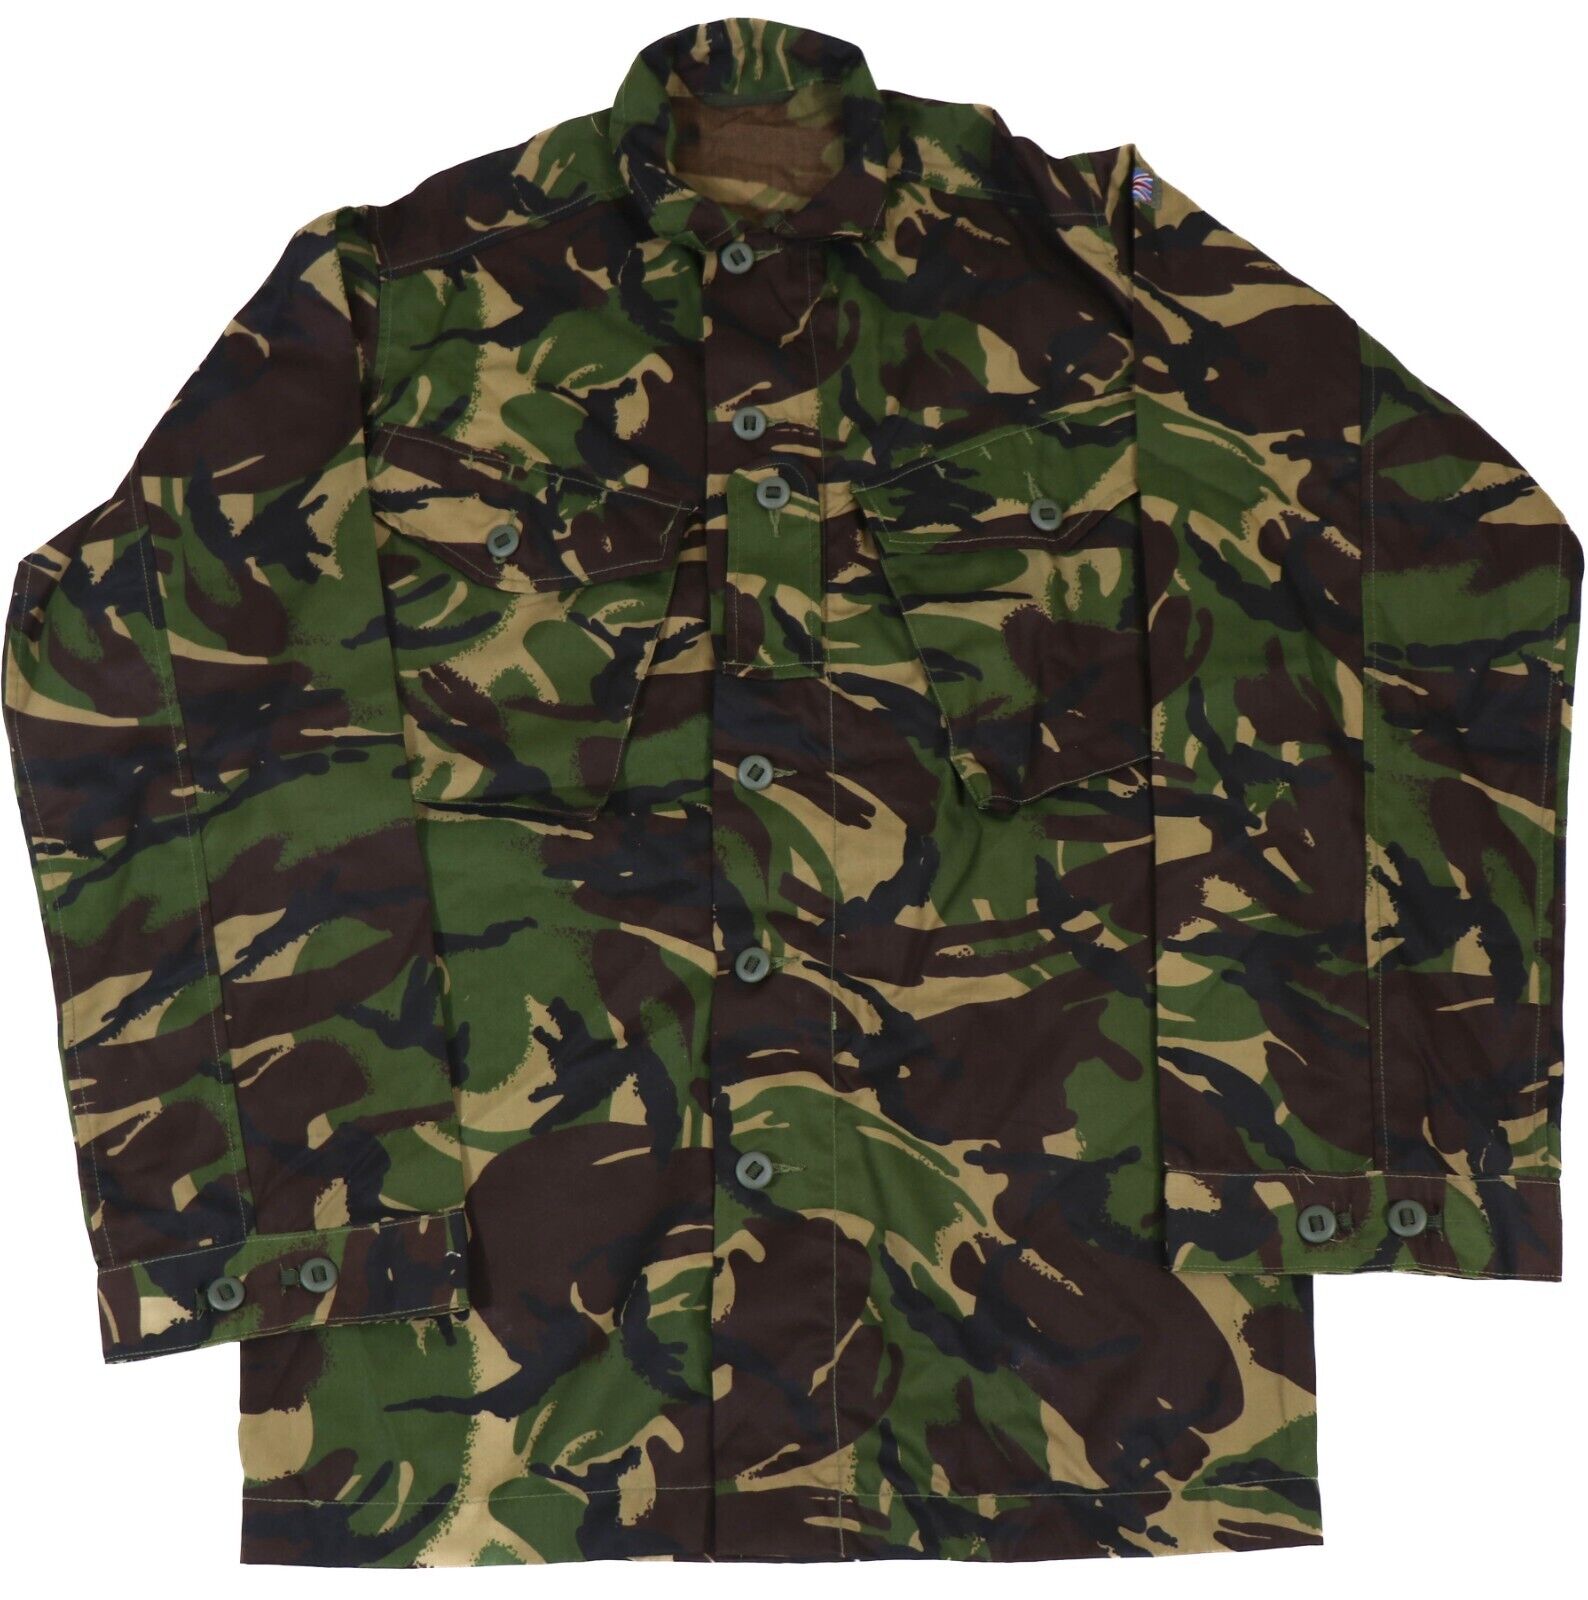 Medium Reg (170/96) British Woodland DPM Jacket Shirt Uniform Army Military